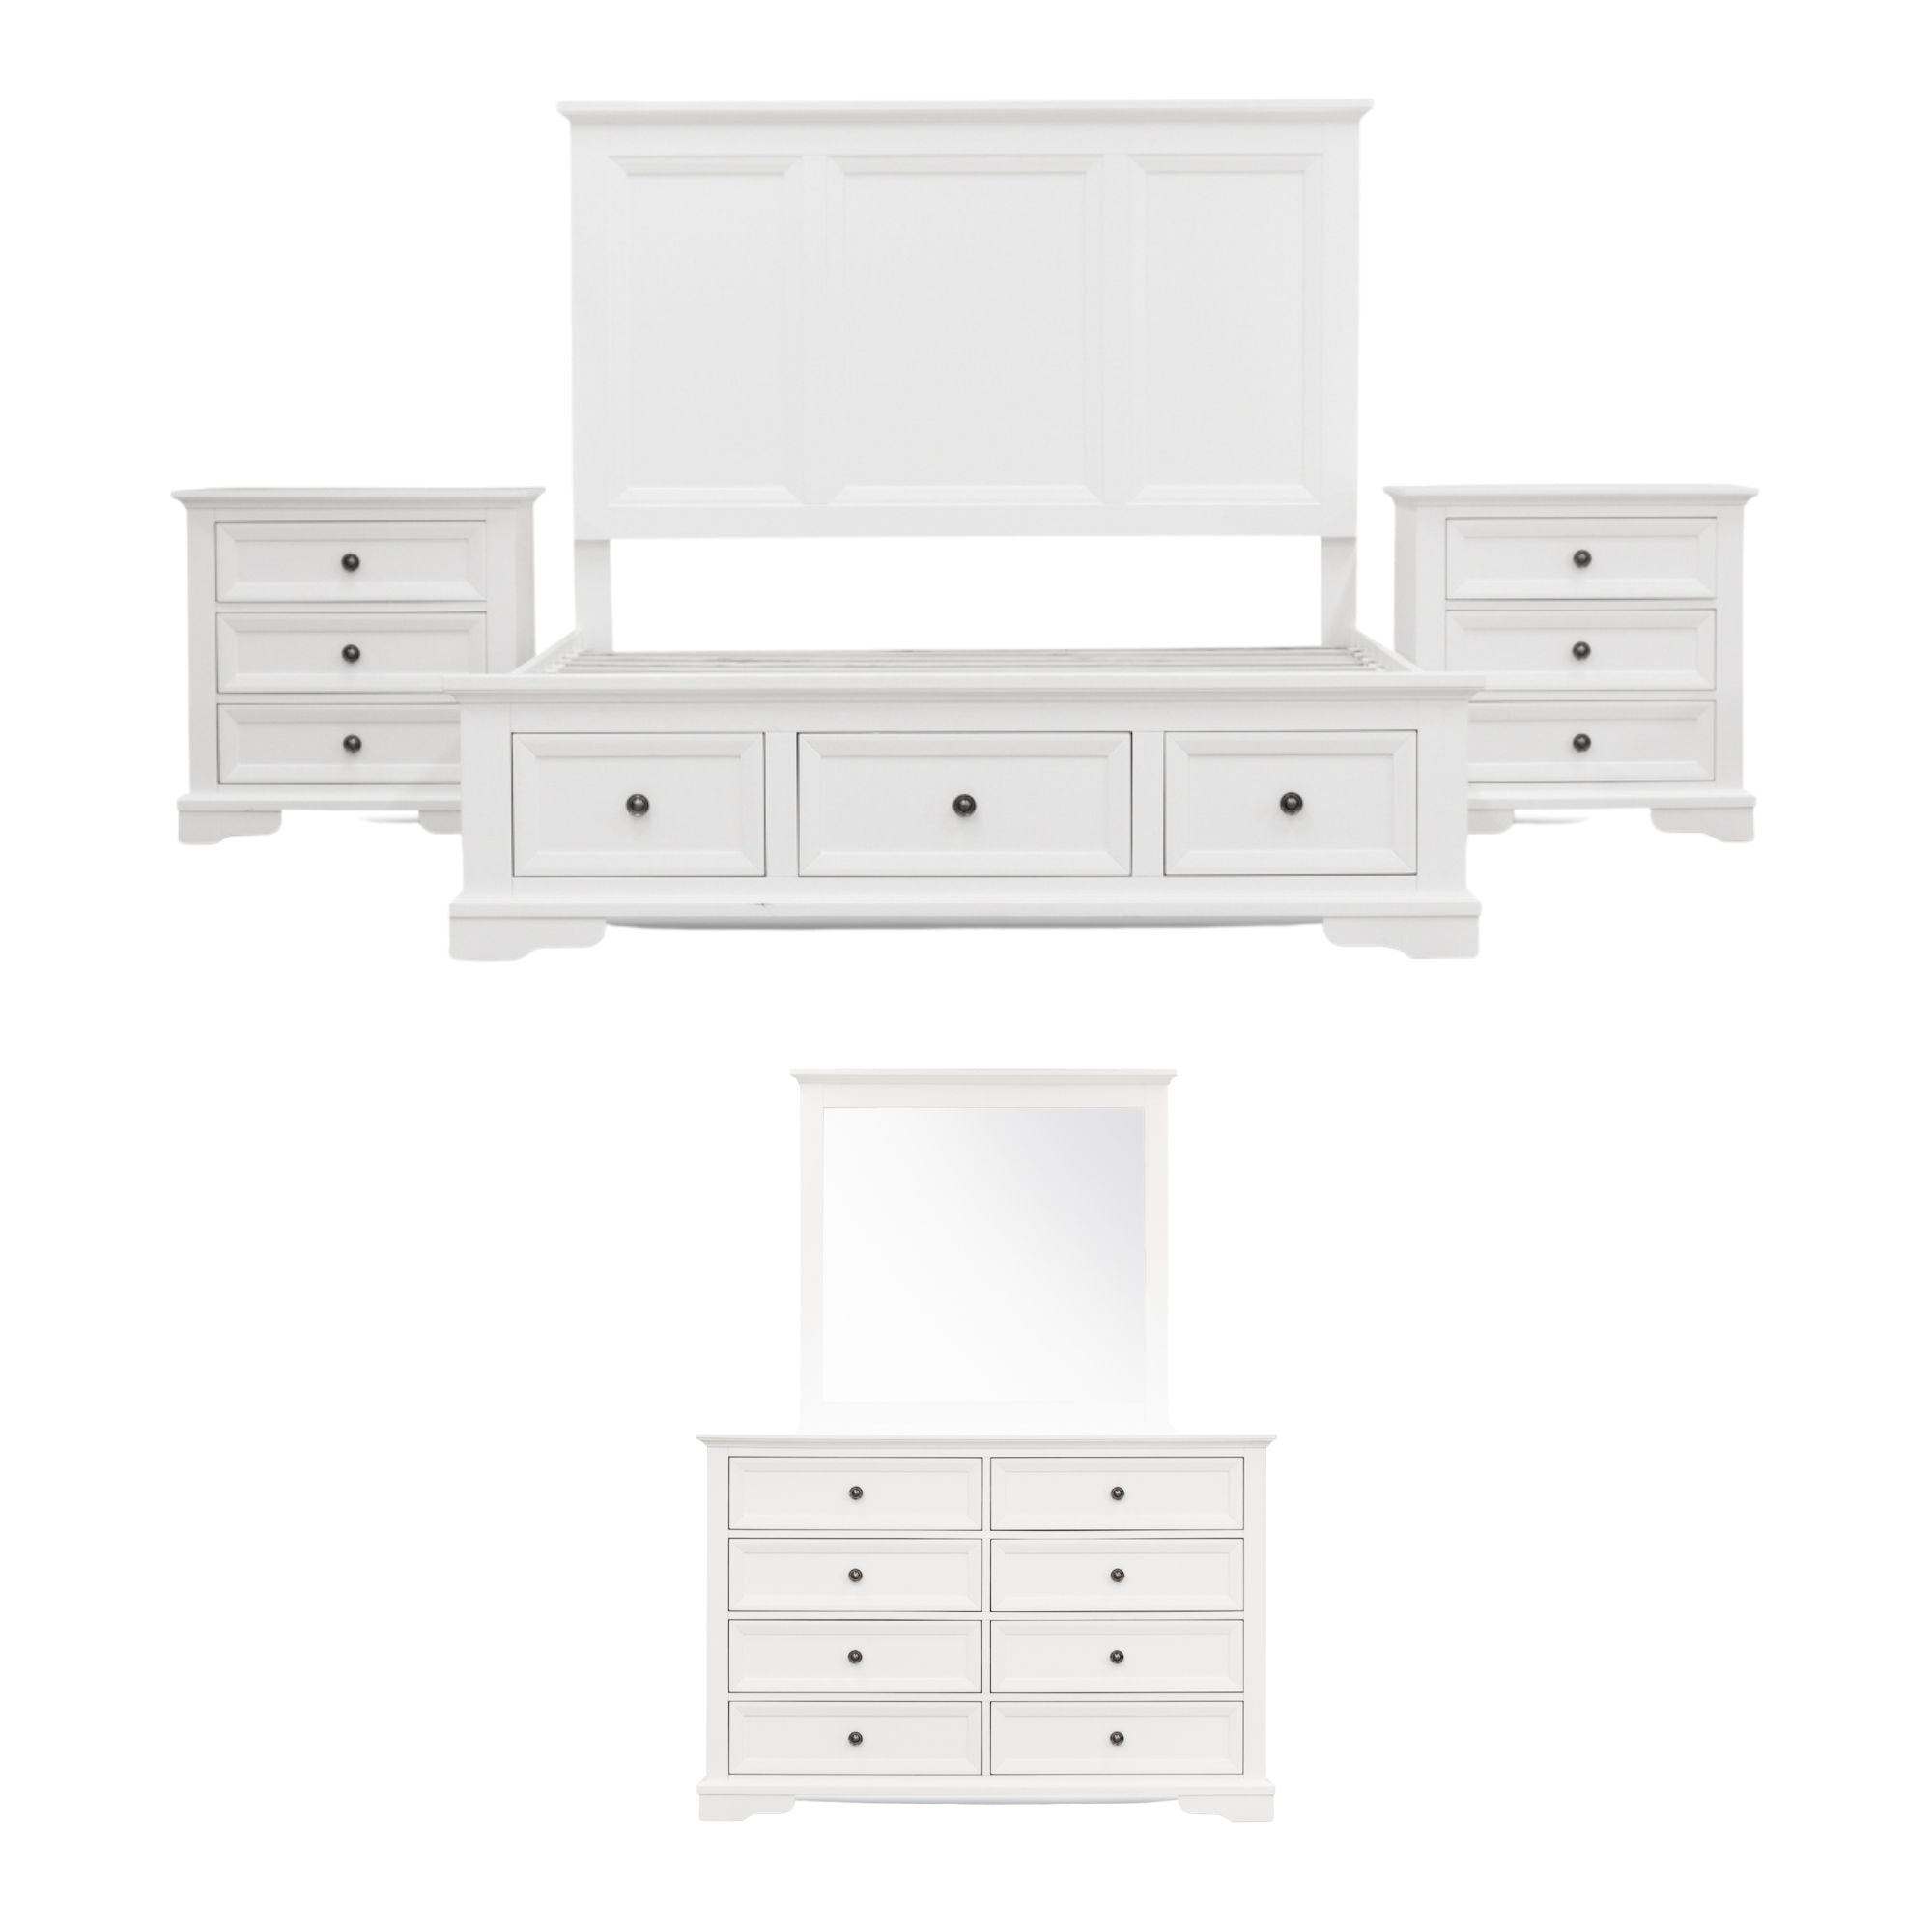 Celosia 5pc King Bed Frame Bedroom Suite Bedside Dresser Mirror Package - White